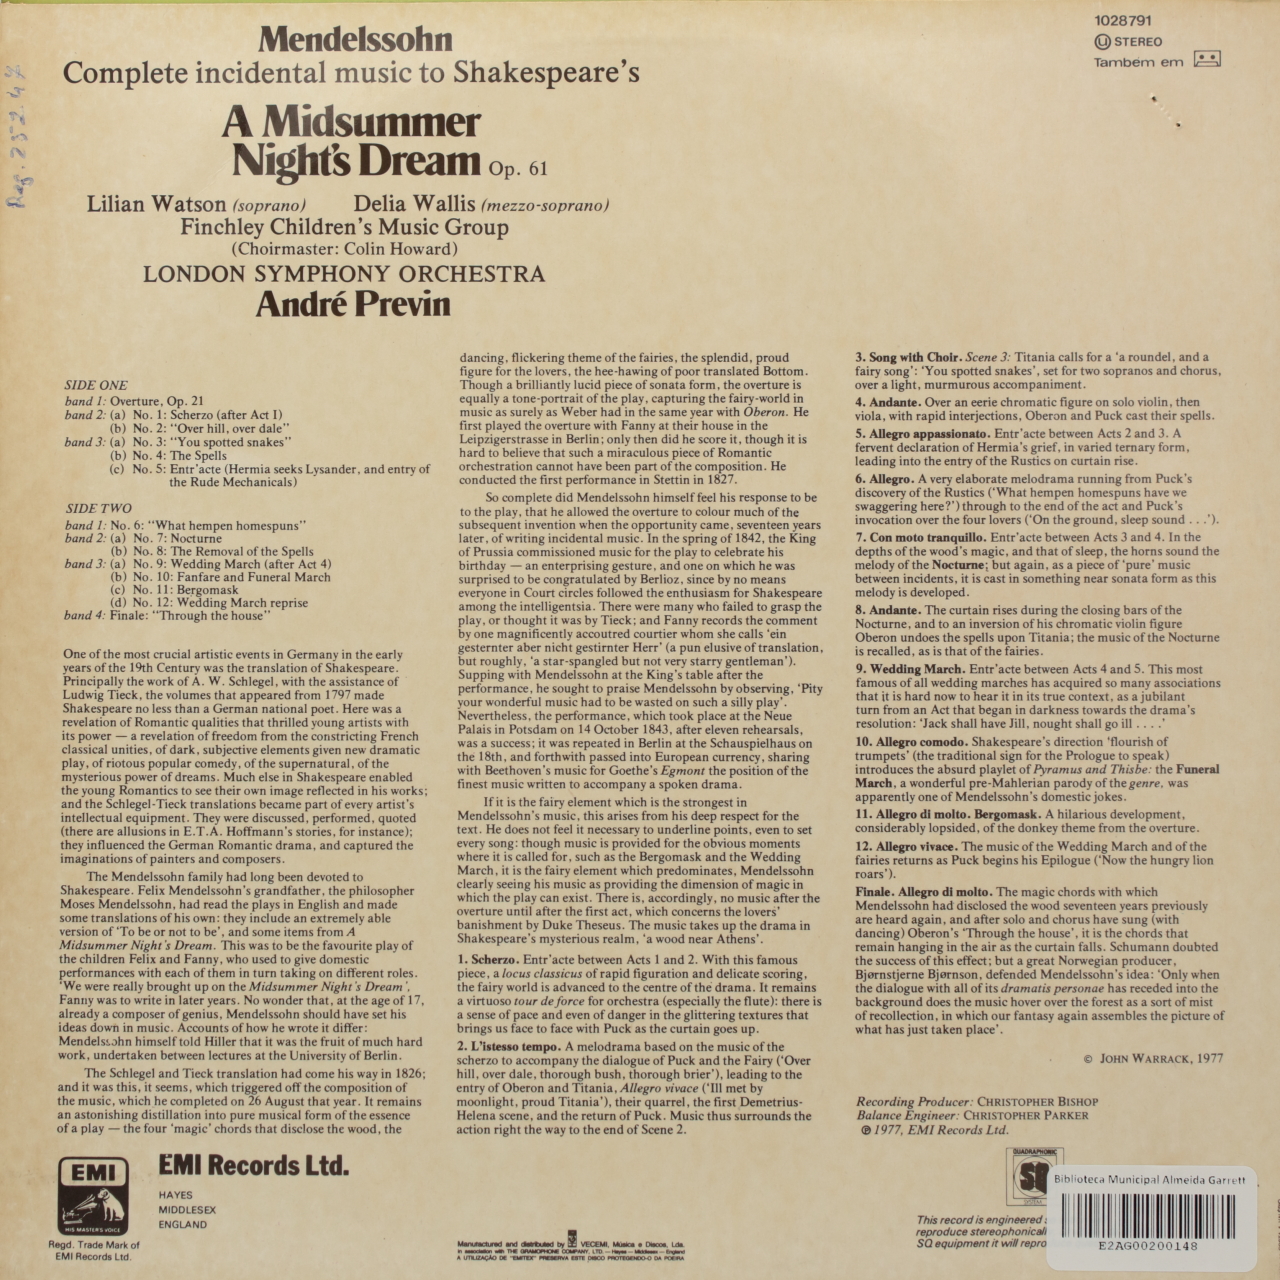 Mendelssohn: Complete incidental music to Shakespeares A Midsummer Nights Dream, Op. 61